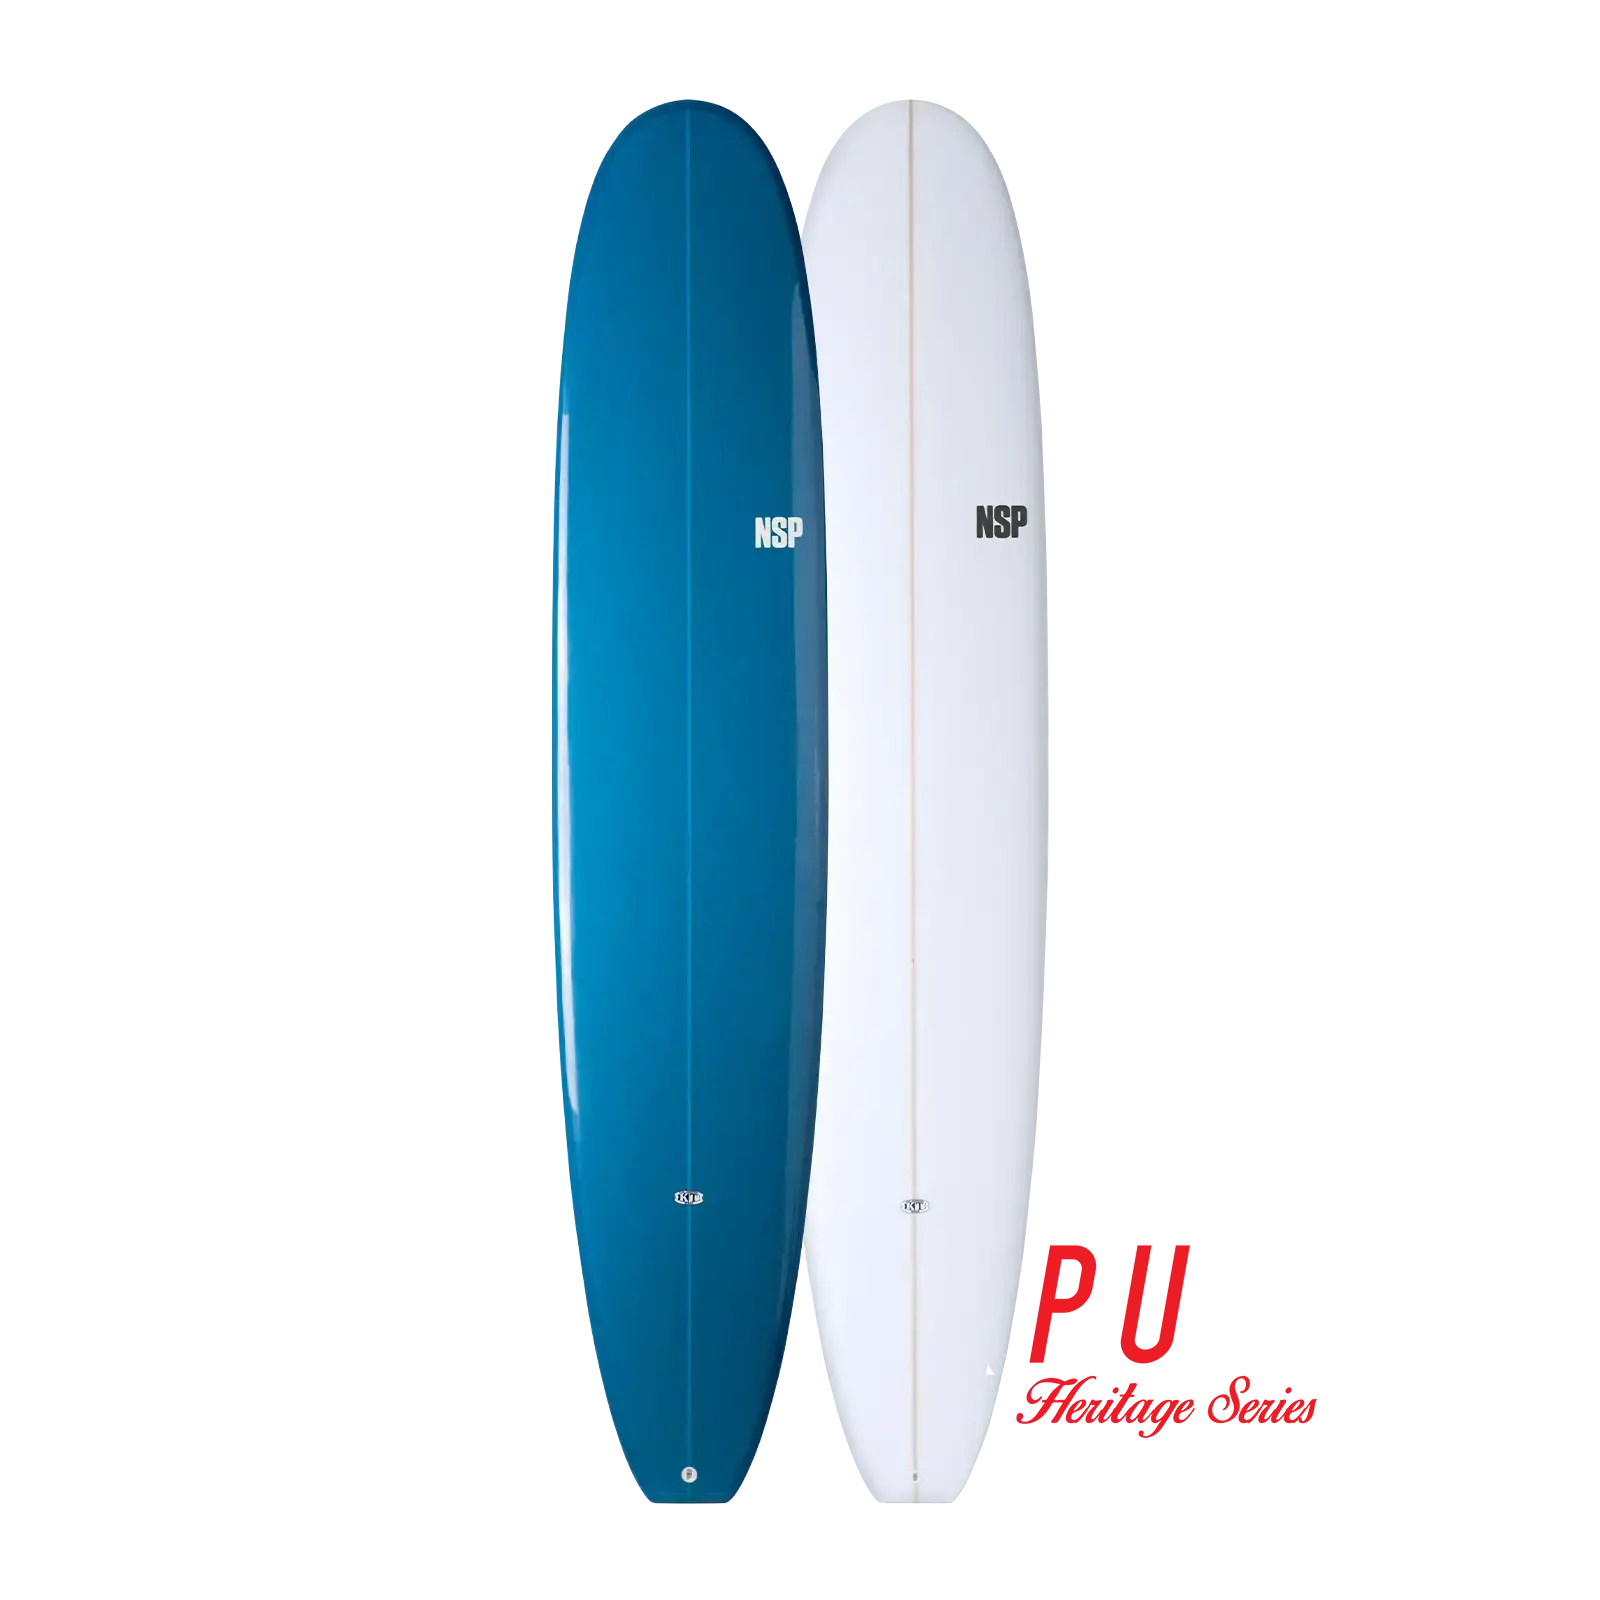 Endless Surfboards NSP  